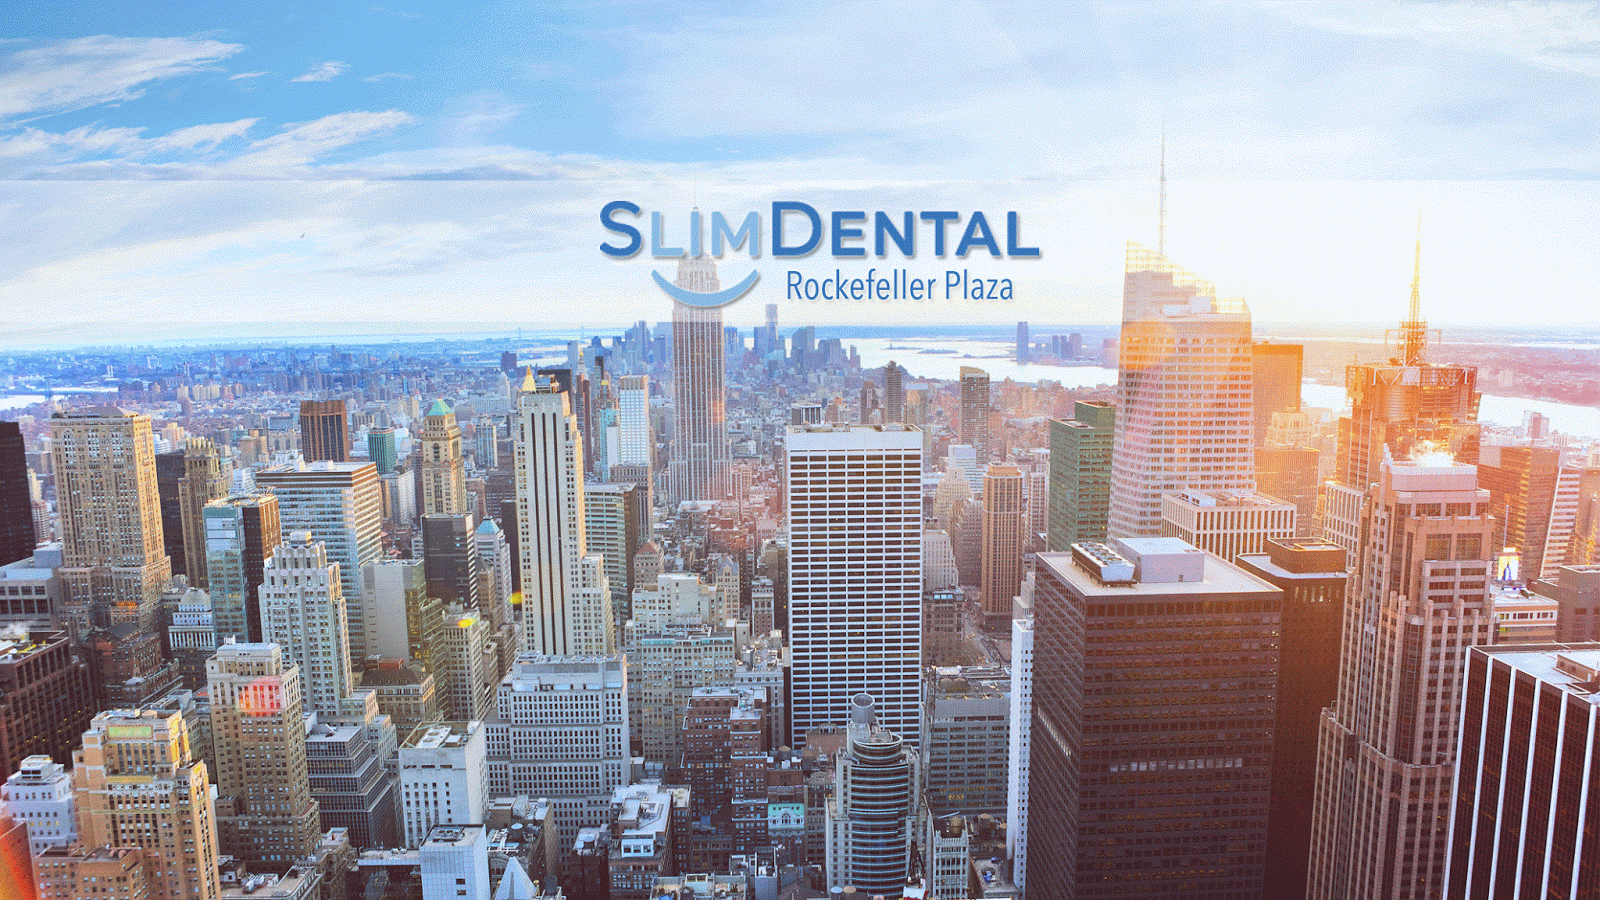 Photo of SLimDental Rockefeller Center in New York City, New York, United States - 3 Picture of Point of interest, Establishment, Health, Dentist